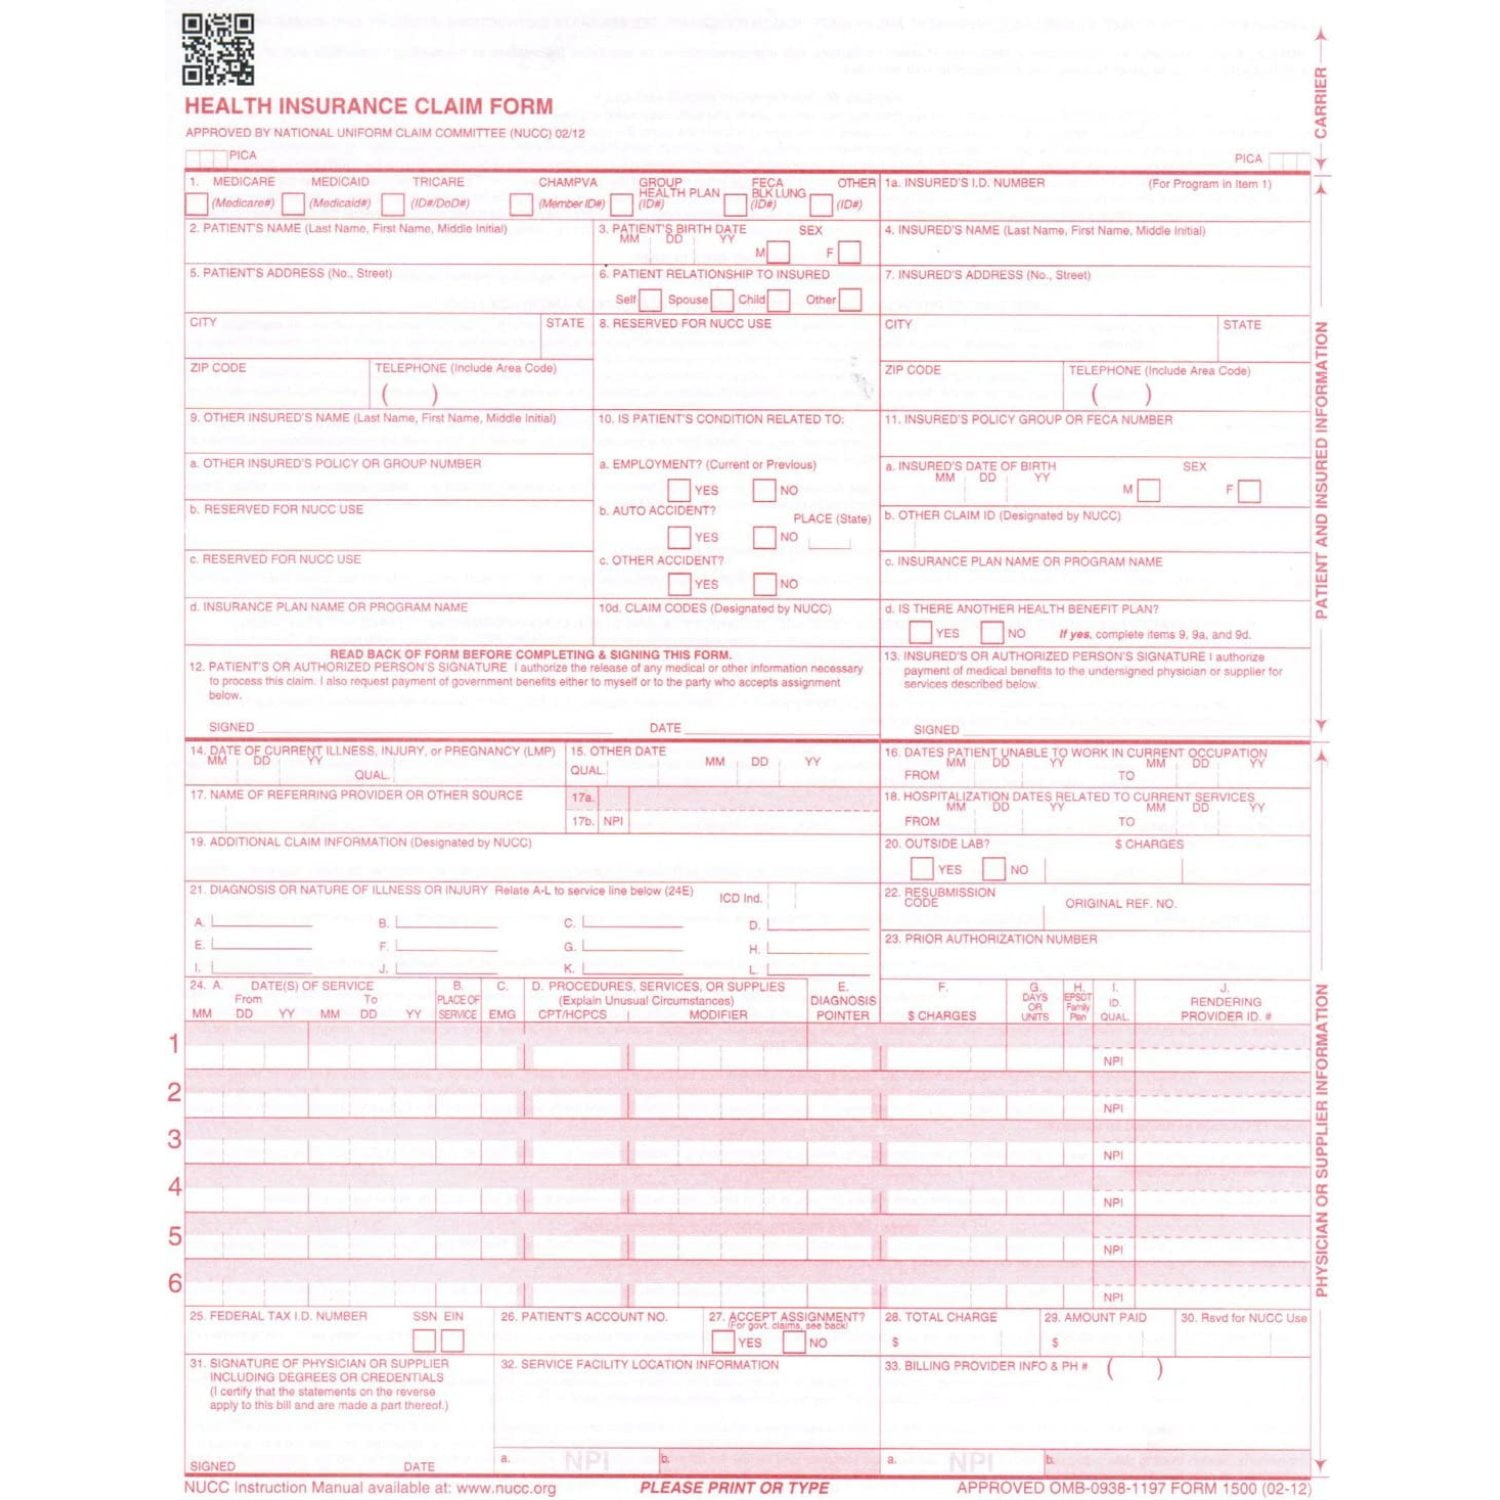 cms-1500-claim-forms-hcfa-version-02-12-2500-sheets-case-1-part